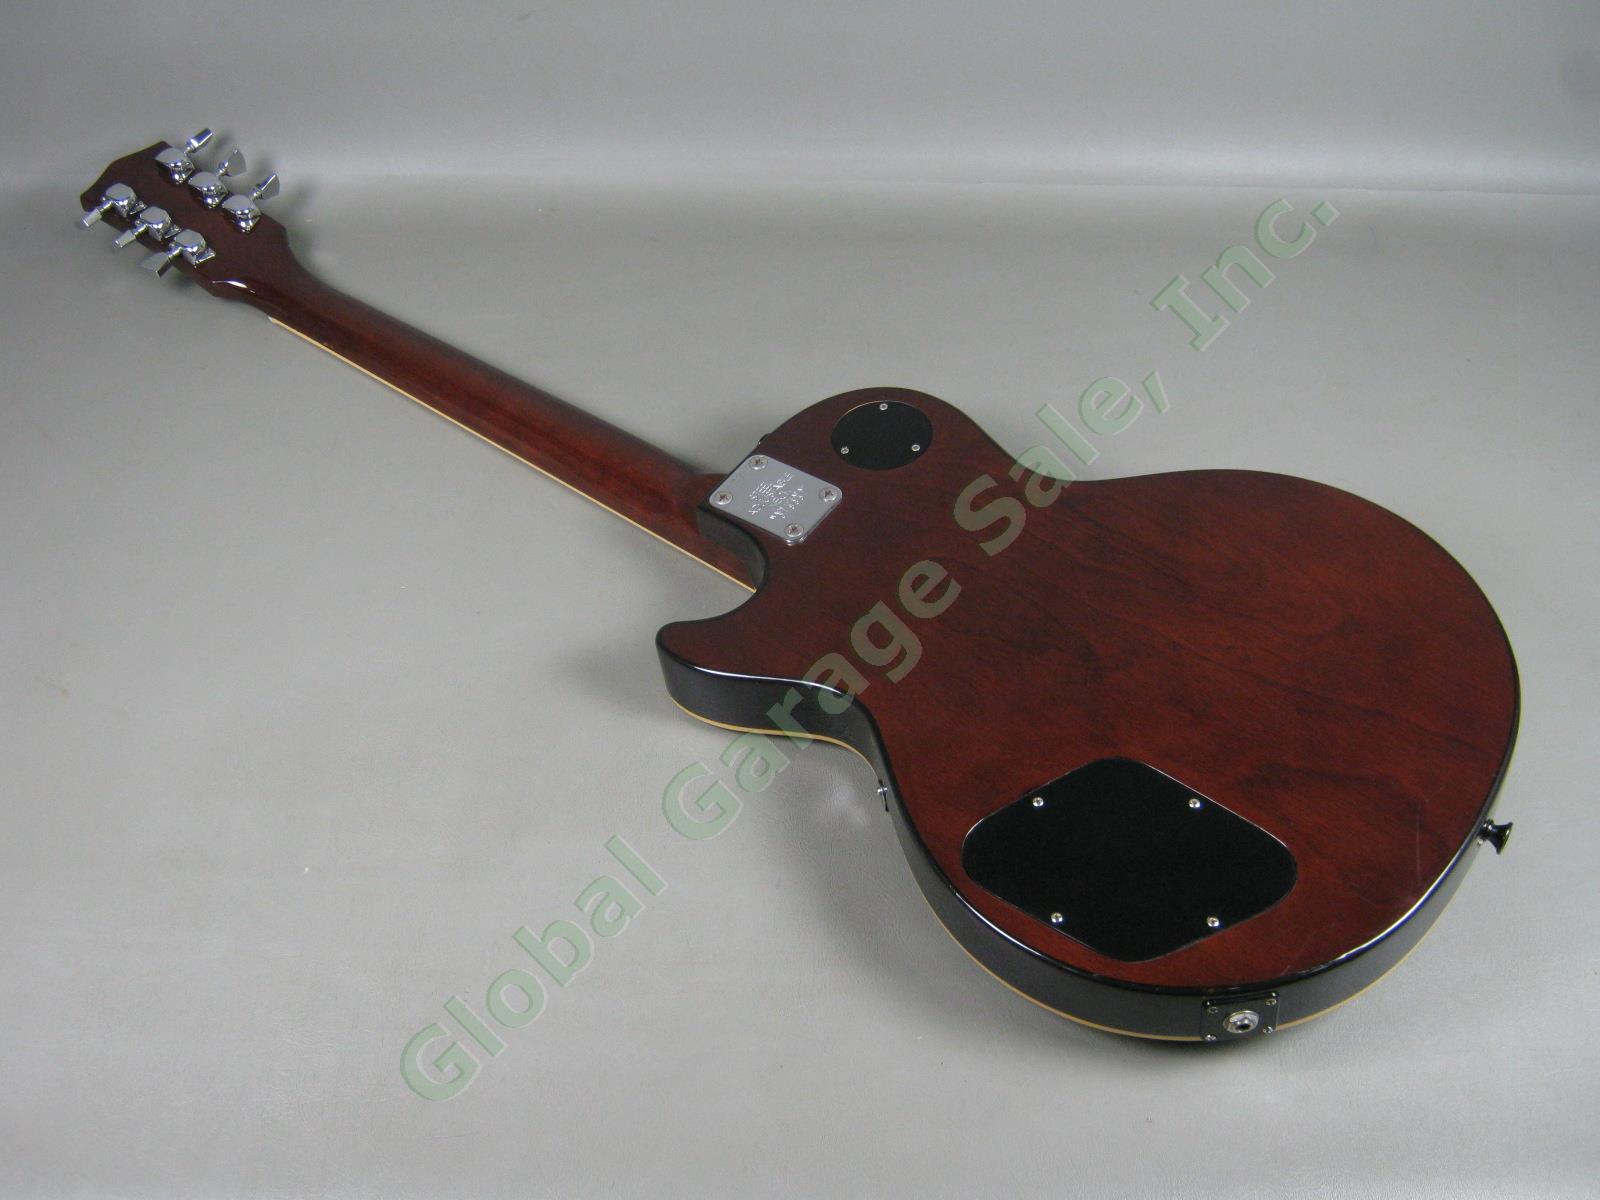 Vtg Matsumoku Aria Mach 1 Les Paul Copy Electric Guitar MIJ Made in Japan NO RES 11